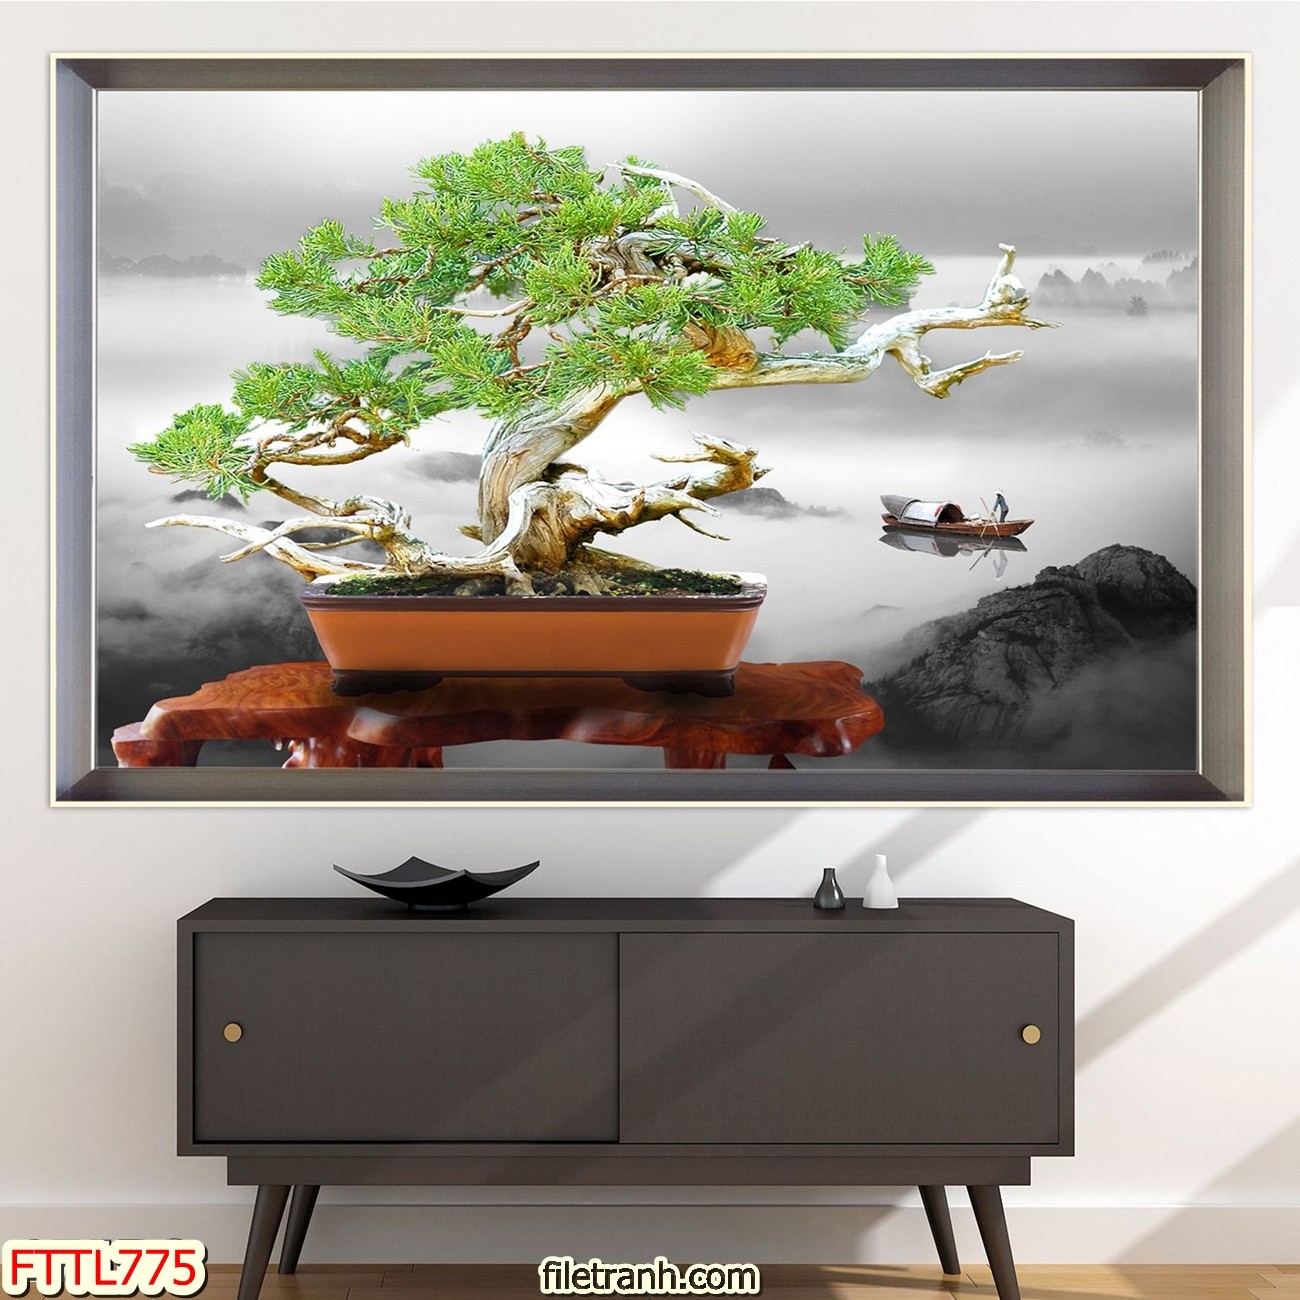 https://filetranh.com/file-tranh-chau-mai-bonsai/file-tranh-chau-mai-bonsai-fttl775.html